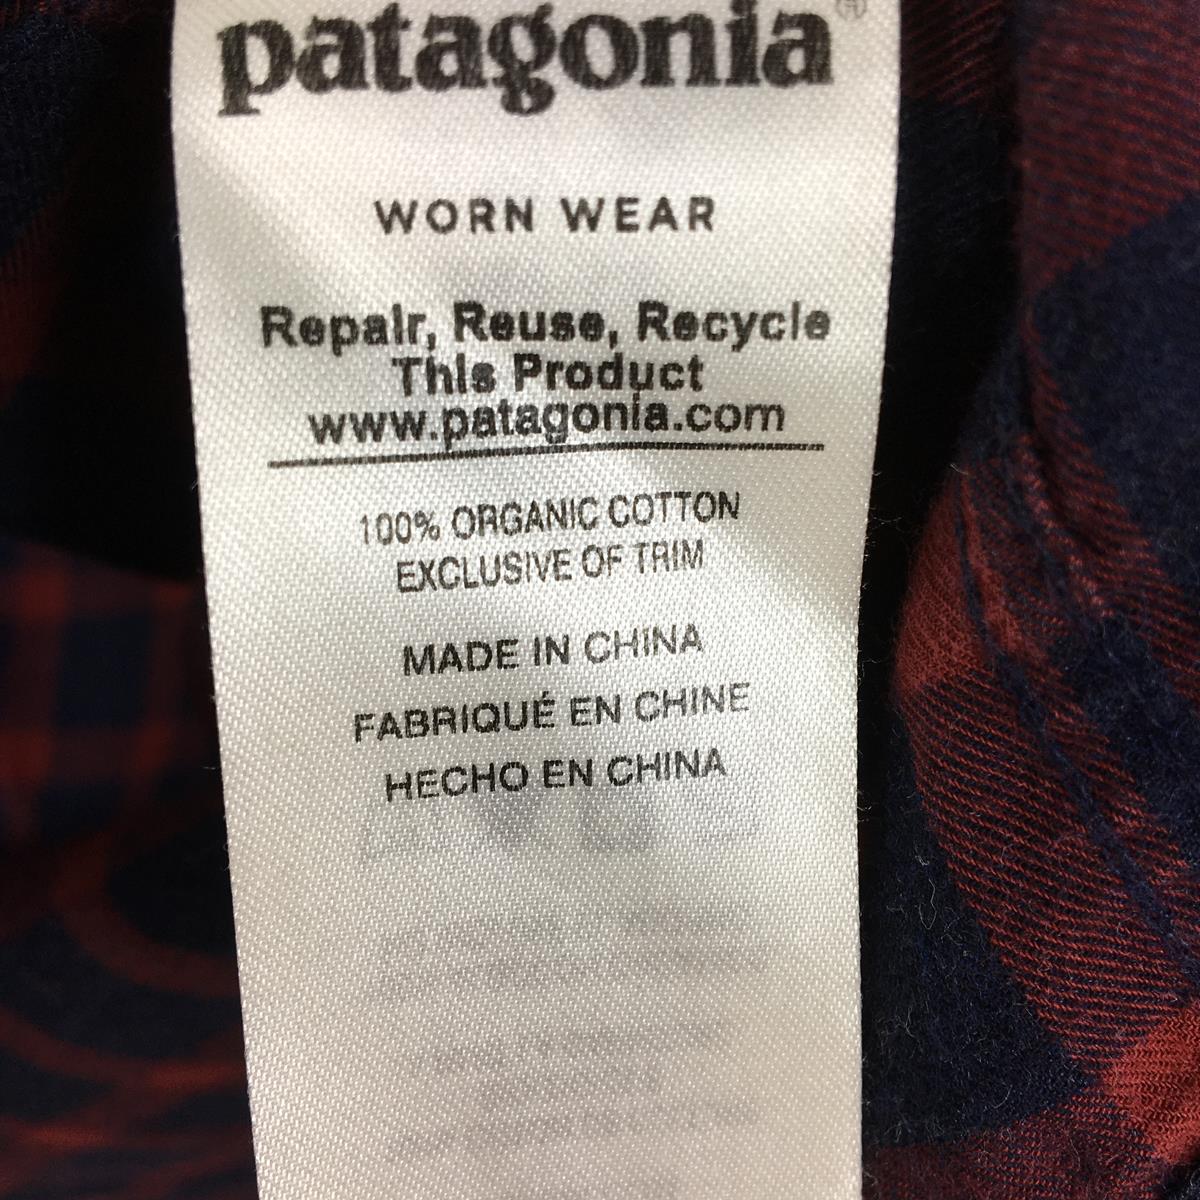 【MEN's M】 パタゴニア ロングスリーブ ピマコットン シャツ Long-Sleeved Pima Cotton Shirt PATAGONIA 53837 ネイビー系